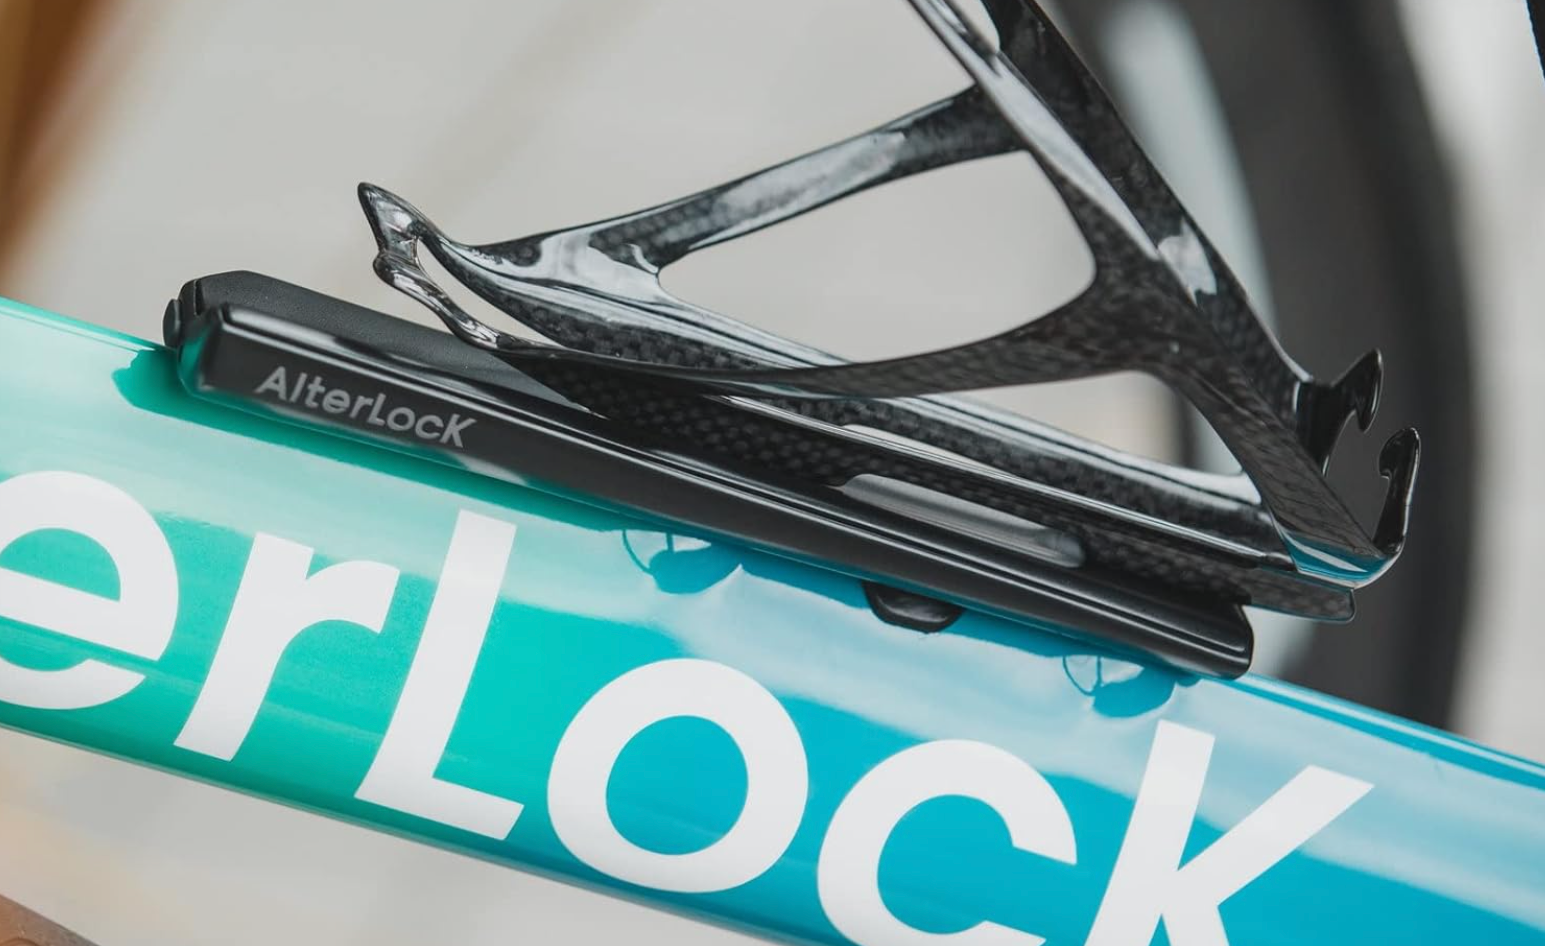 AlterLockの盗難防止アラーム&GPS追跡が大切な自転車を盗難から守って